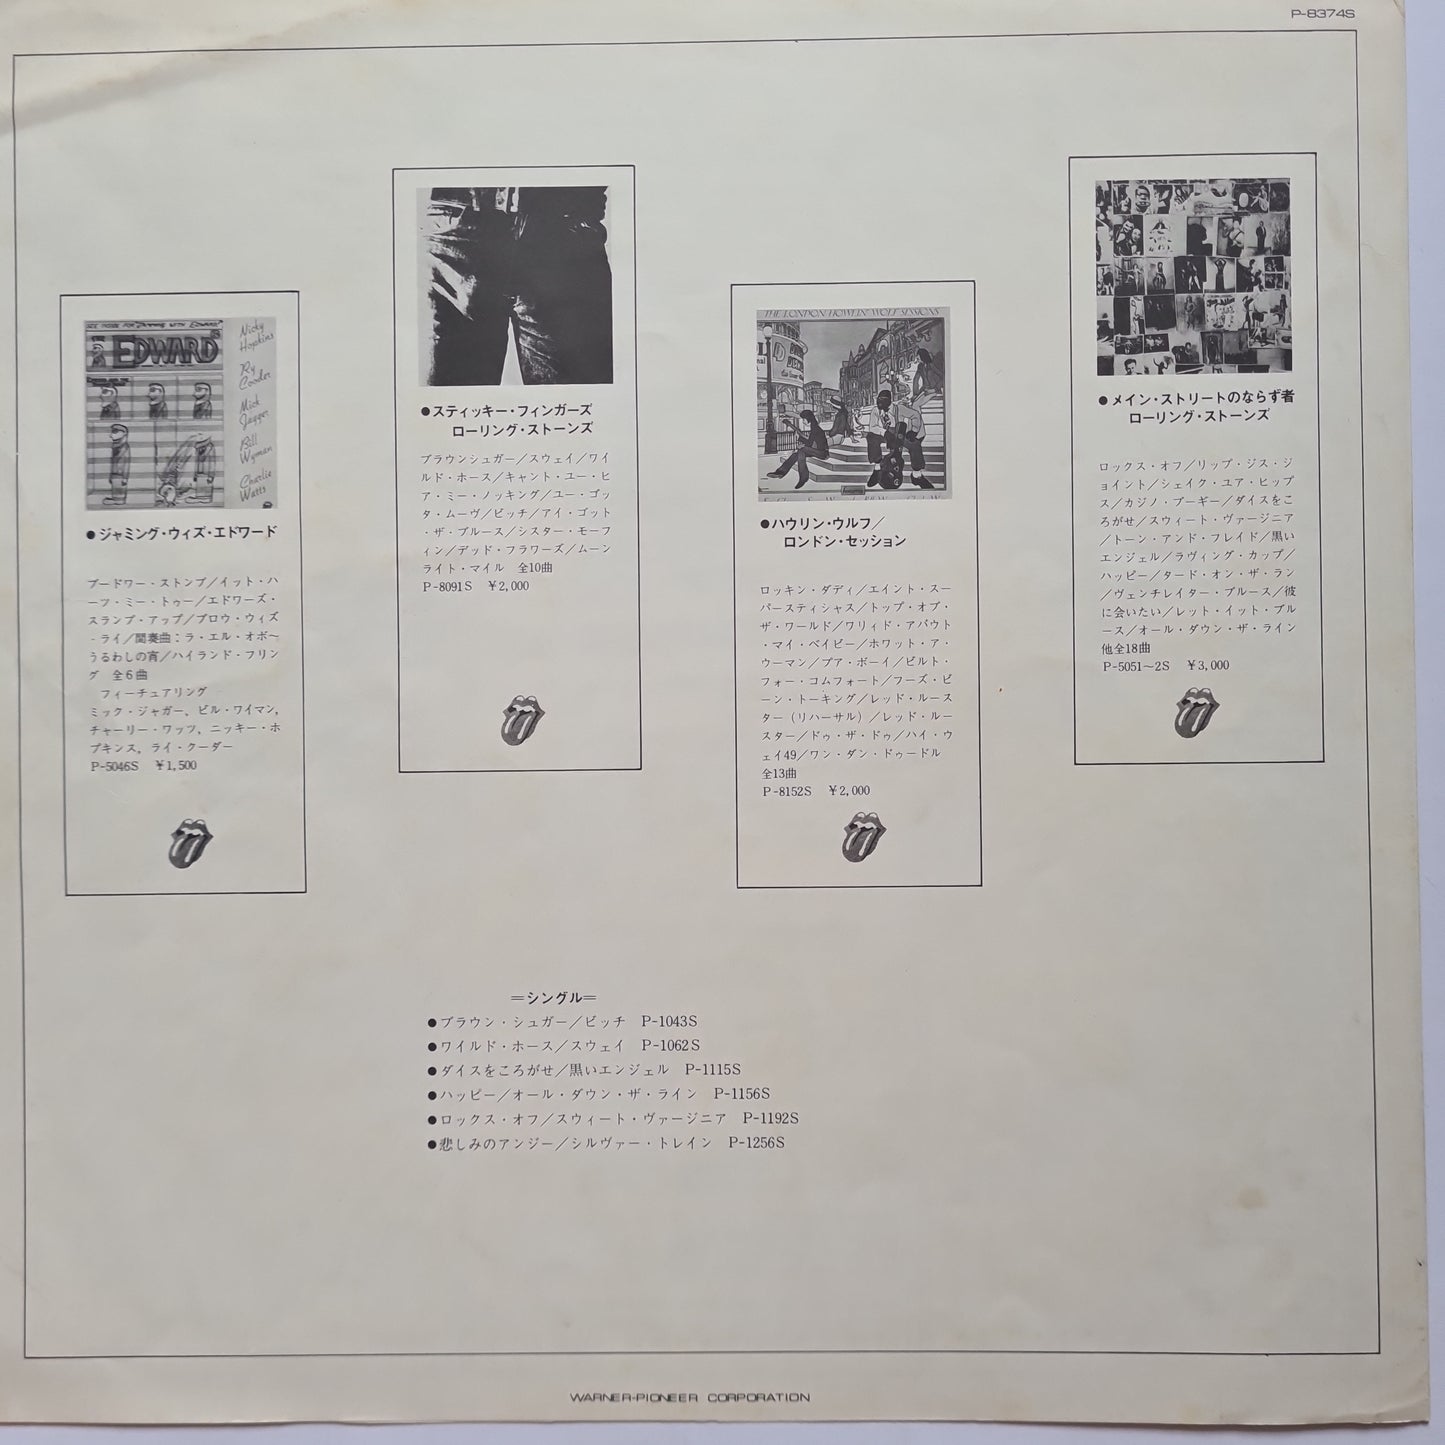 The Rolling Stones – Goats Head Soup - 1973 (Gatefold) - Vinyl Record